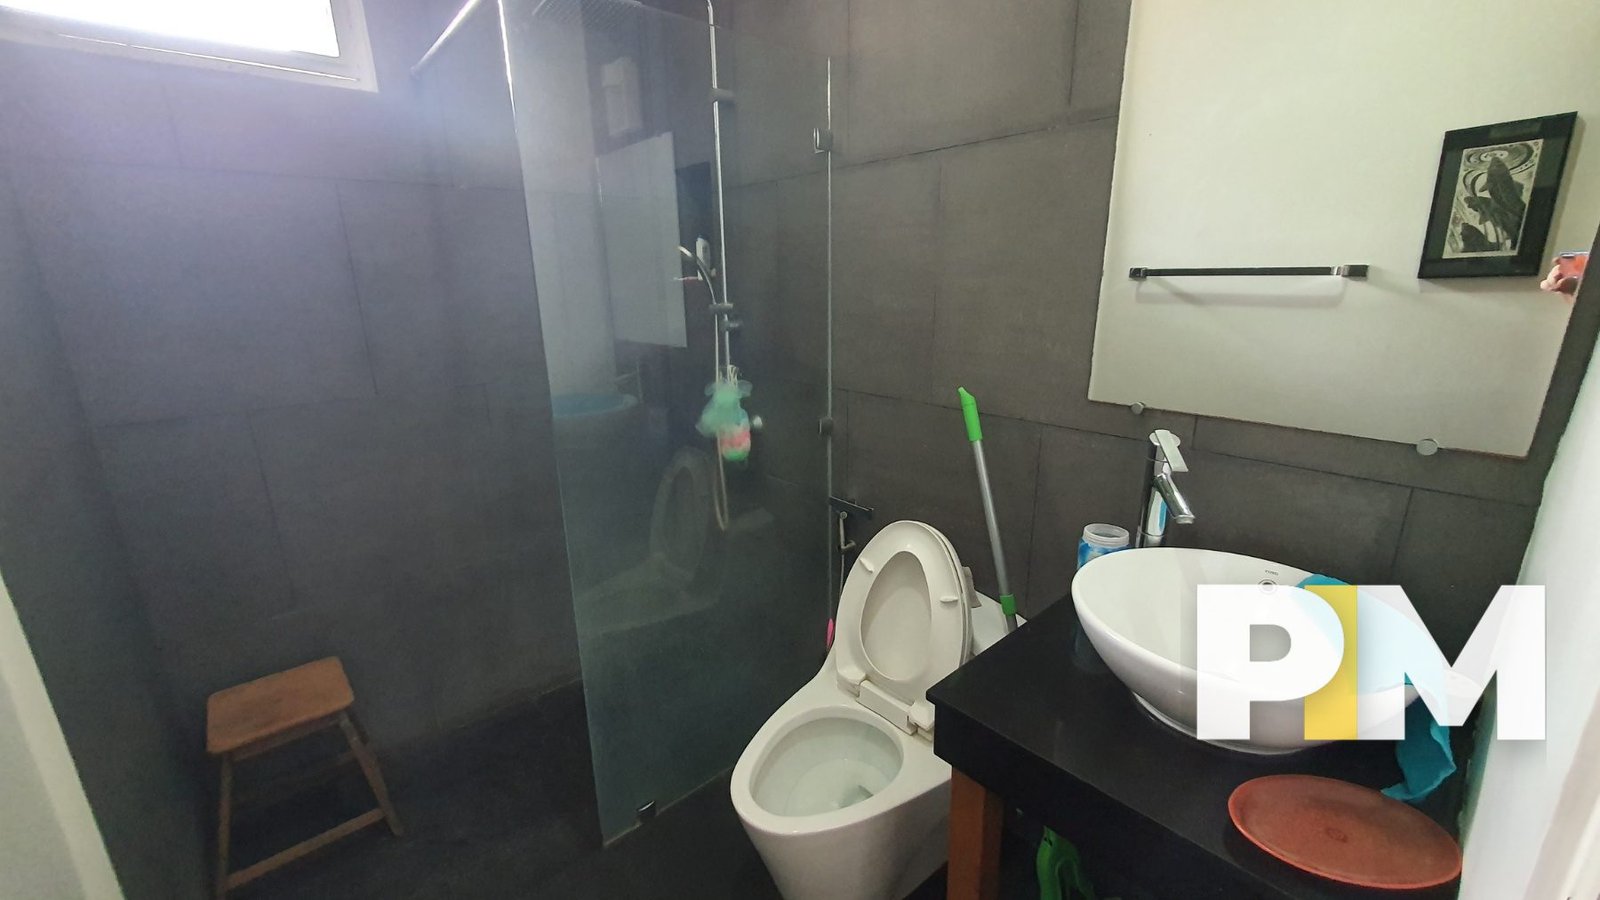 Bathroom with sink - Yangon Real Estate (2)